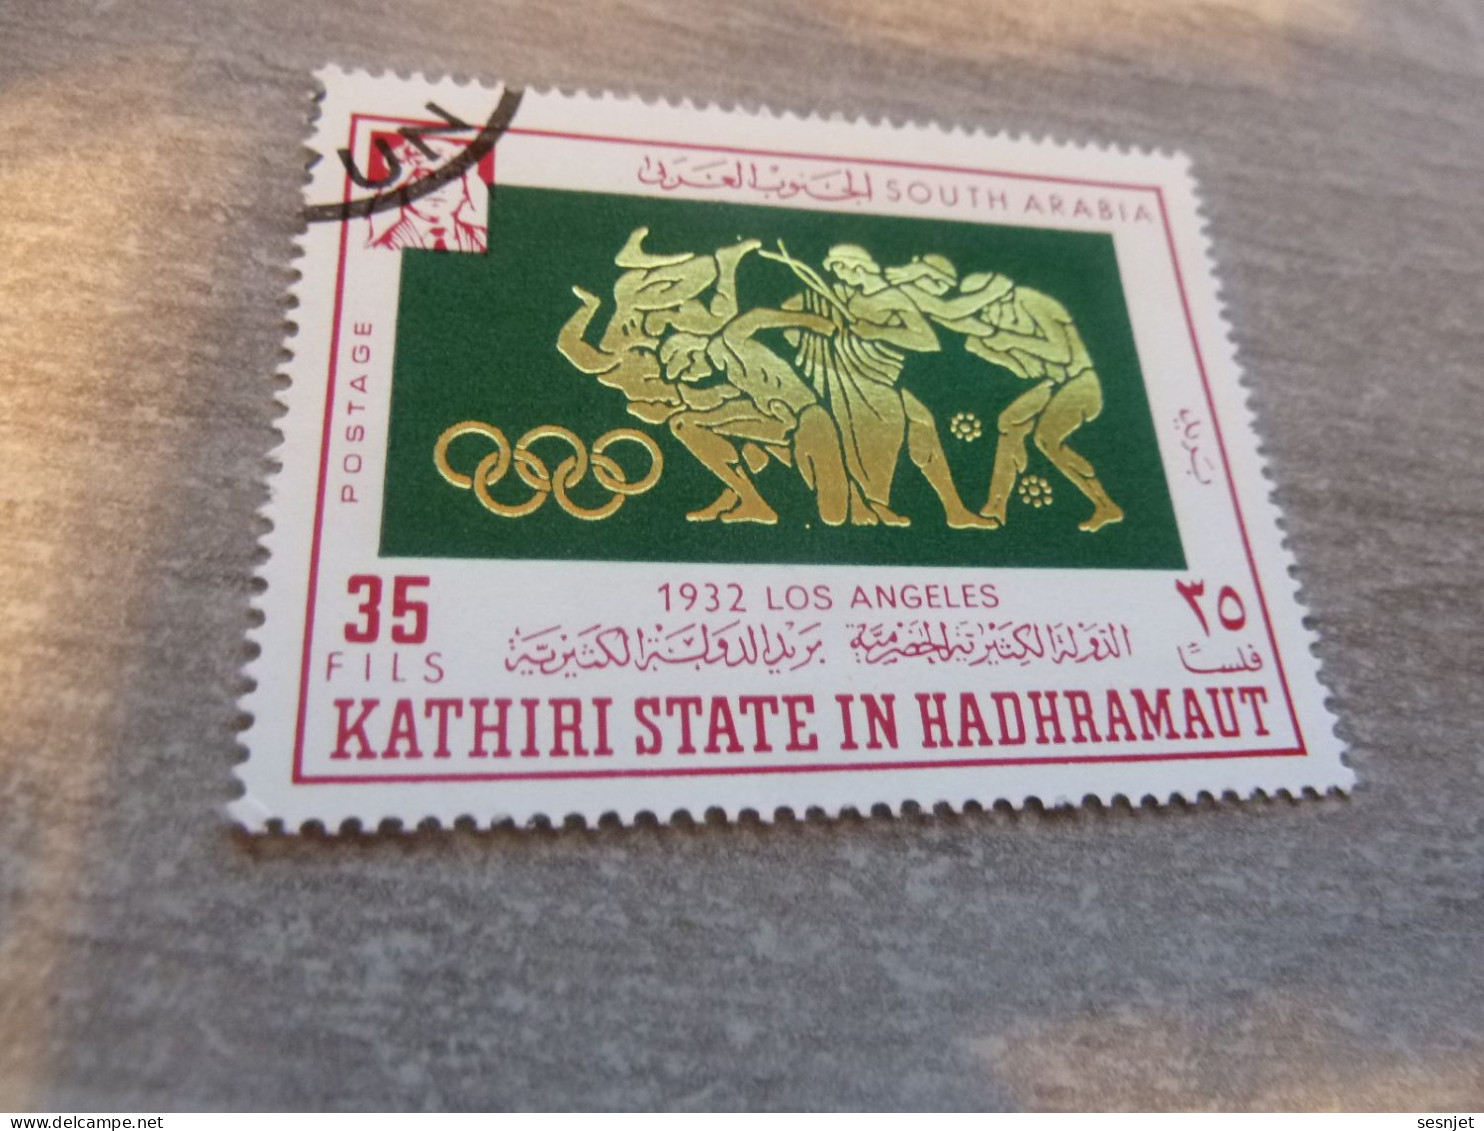 Kathiri State In Hadhramaut - 1932 - Los Angeles - Val 35 Fils - Postage - Multicolore - Oblitéré - - Sommer 1932: Los Angeles